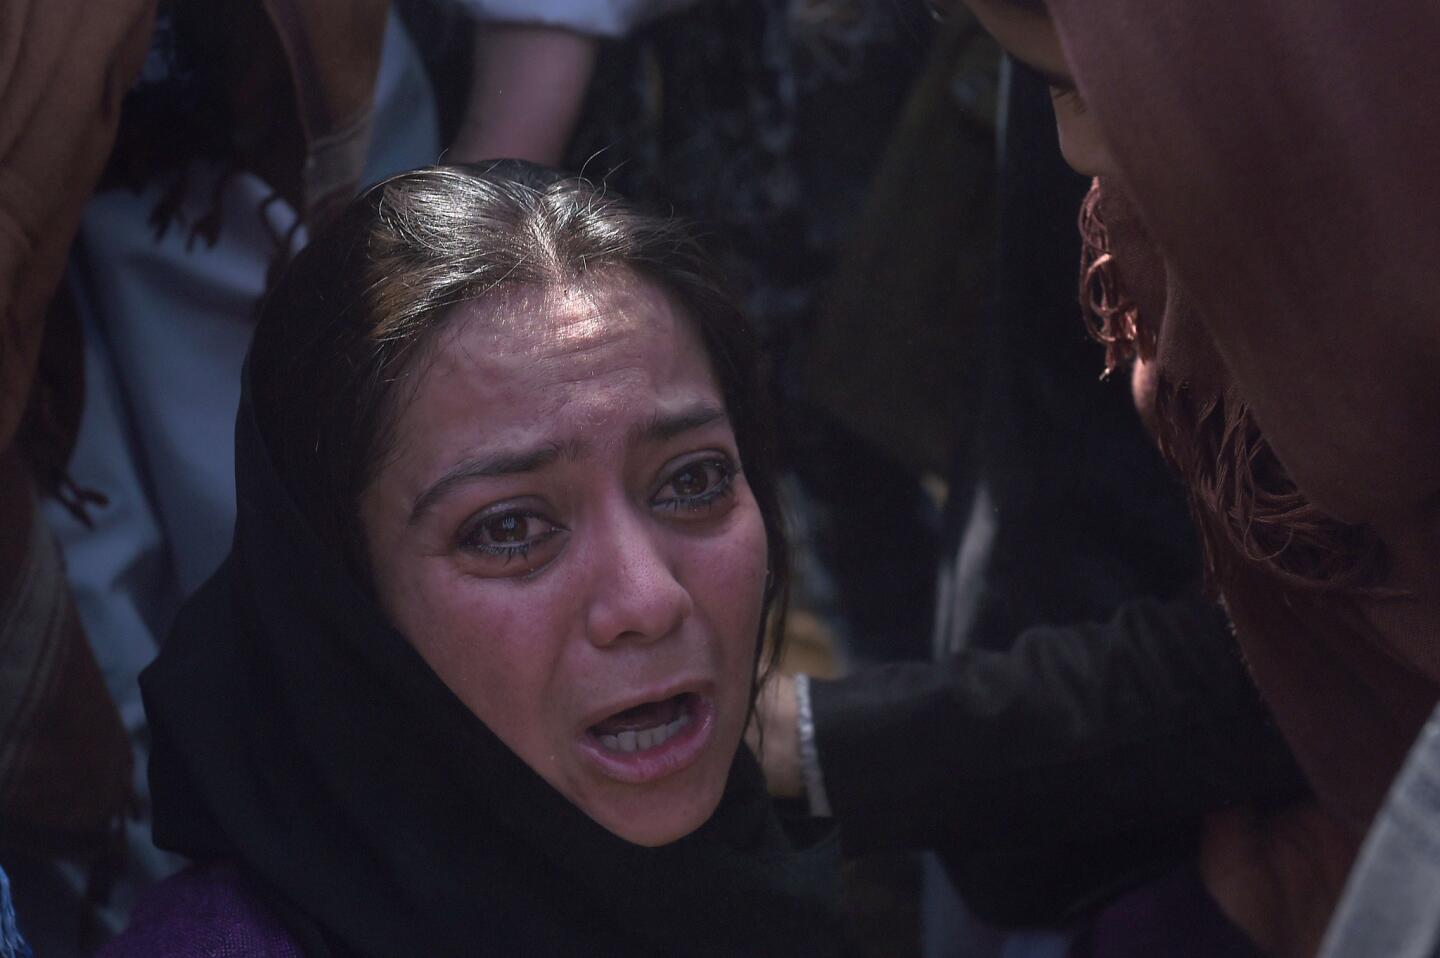 Afghan woman beaten by mob